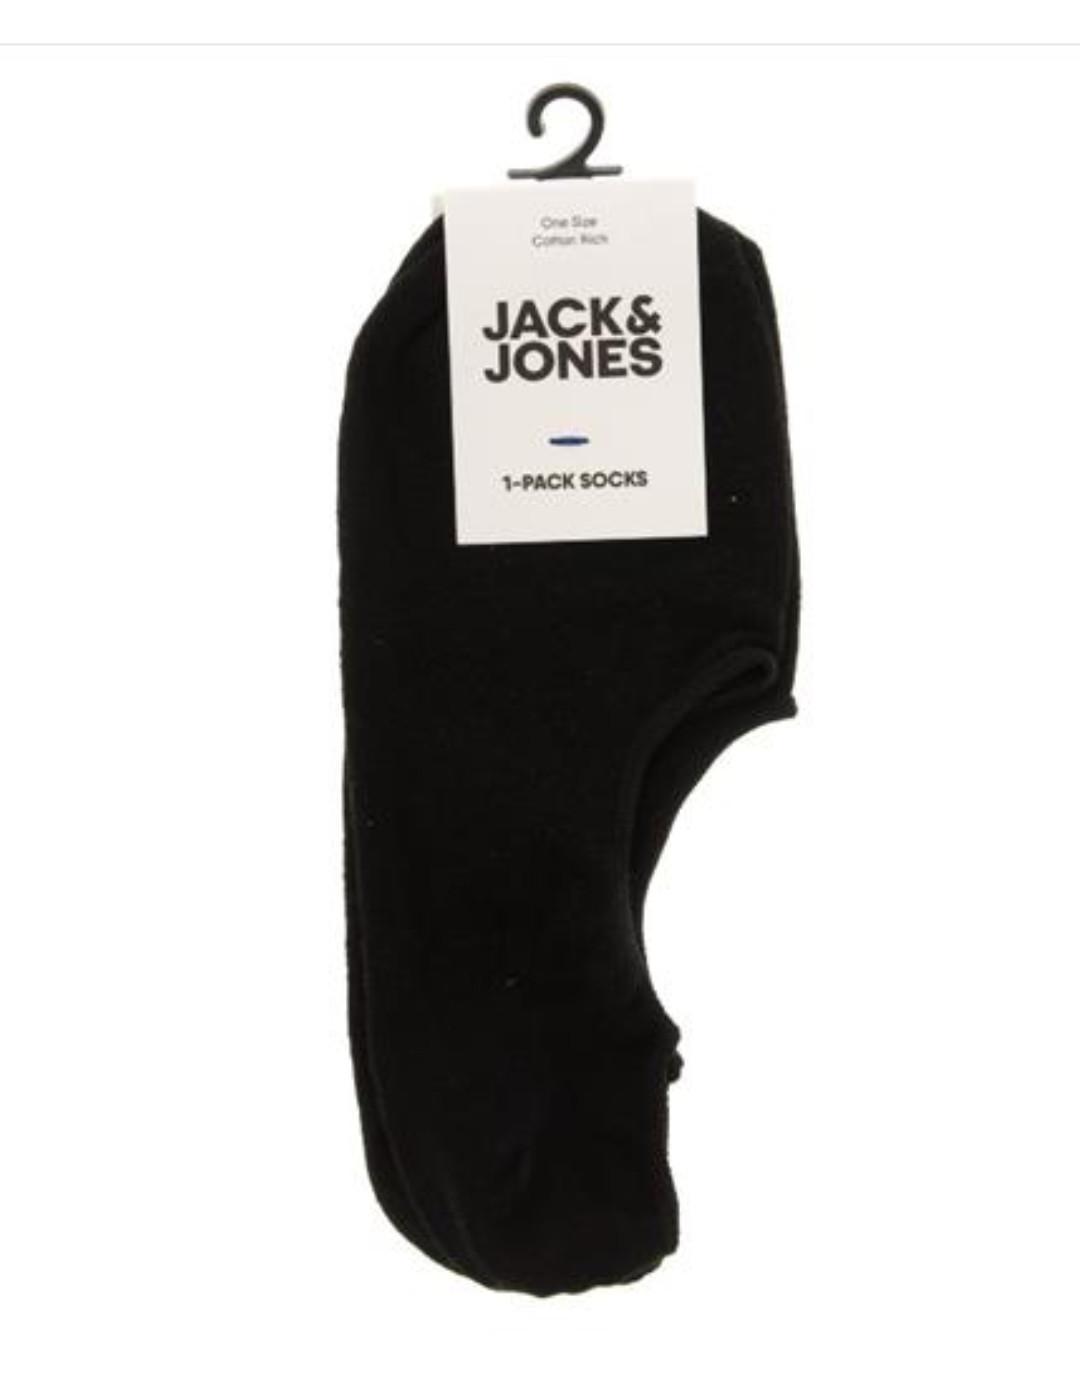 Calcetines Jack&Jones pack 5 pares cortos para hombre